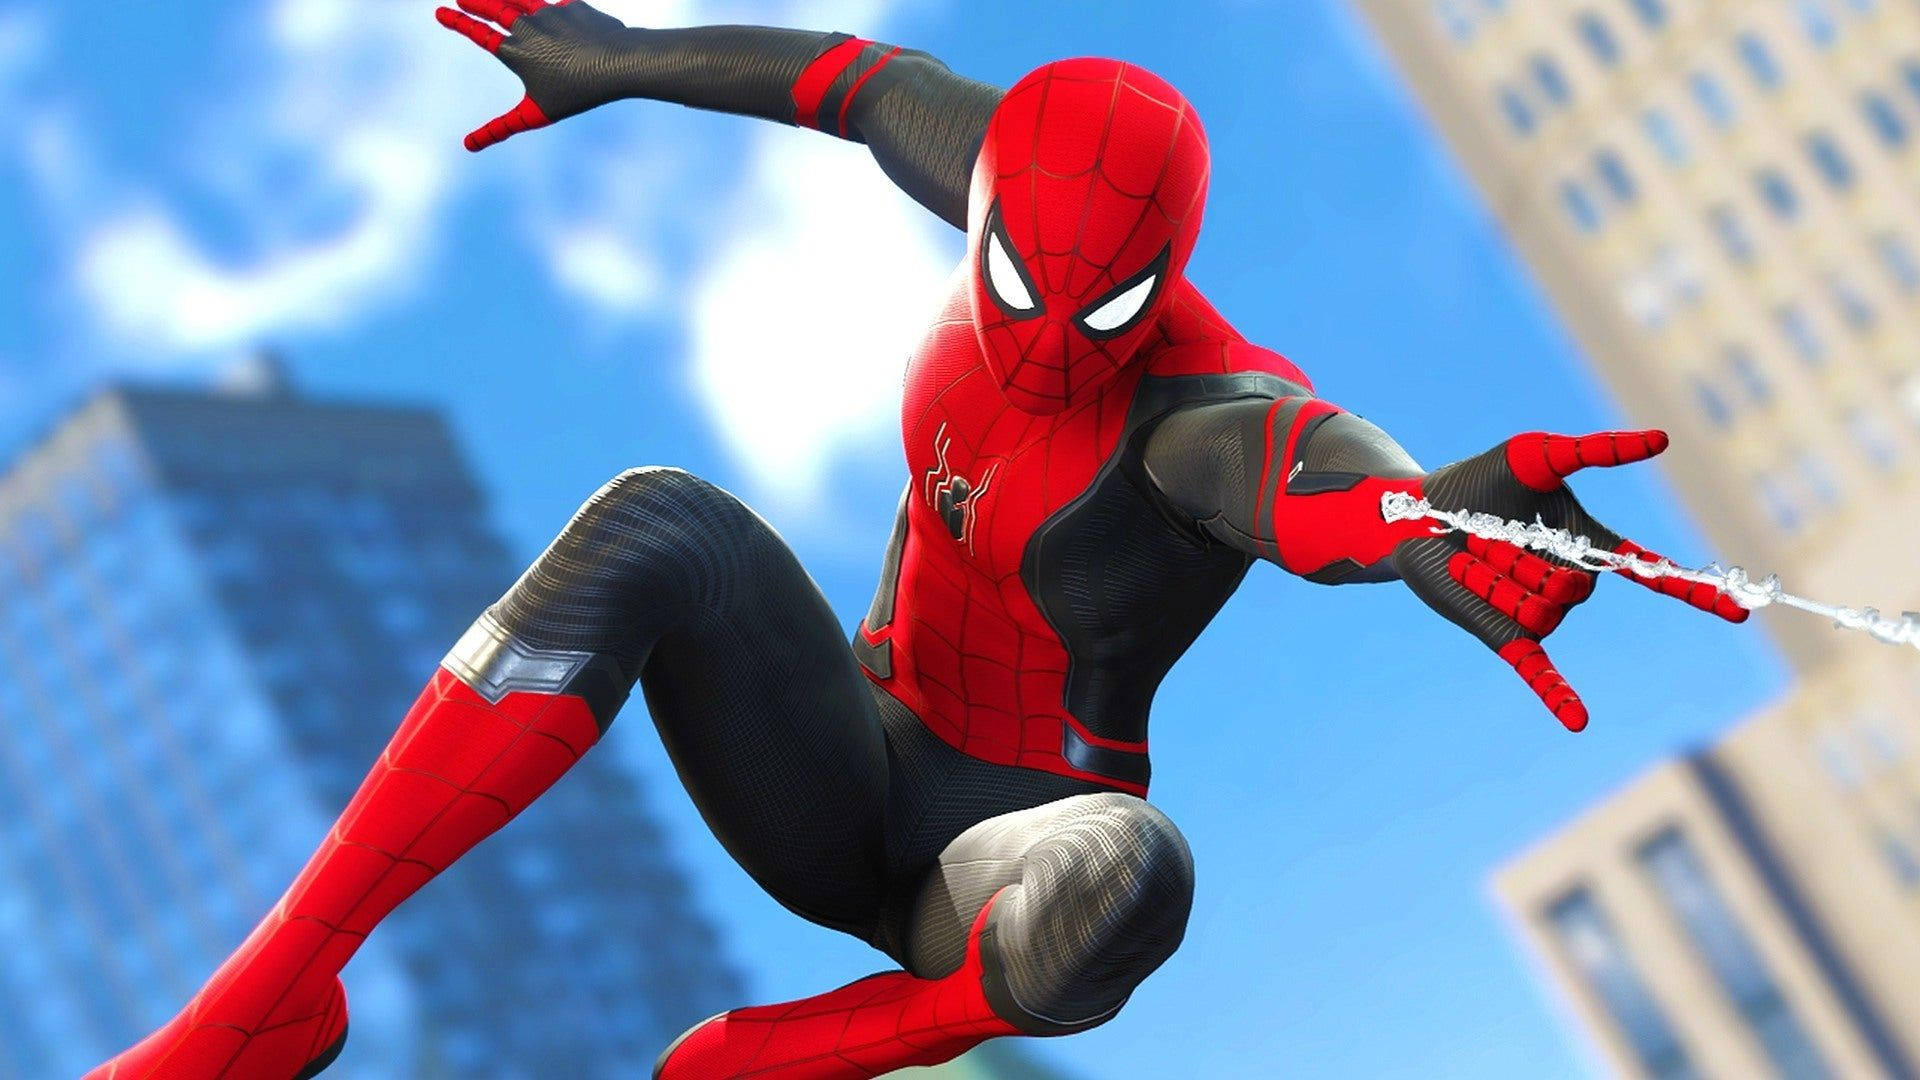 4k Spiderman Throwing Web Background